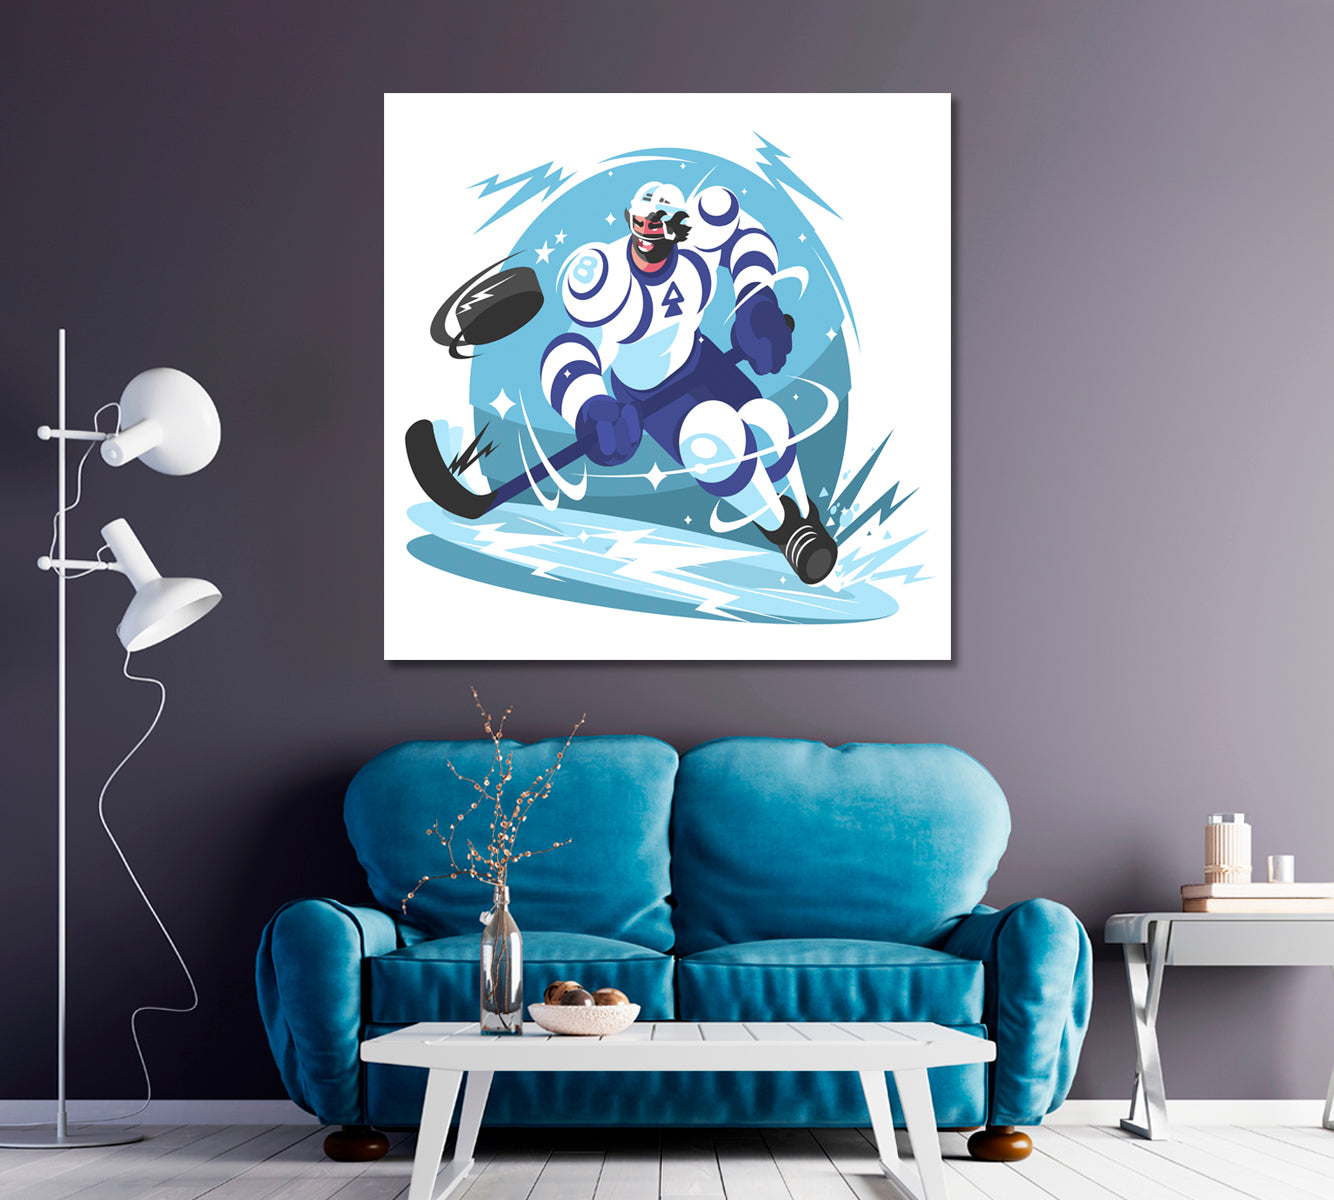 Ice Hockey Player Canvas Print ArtLexy   